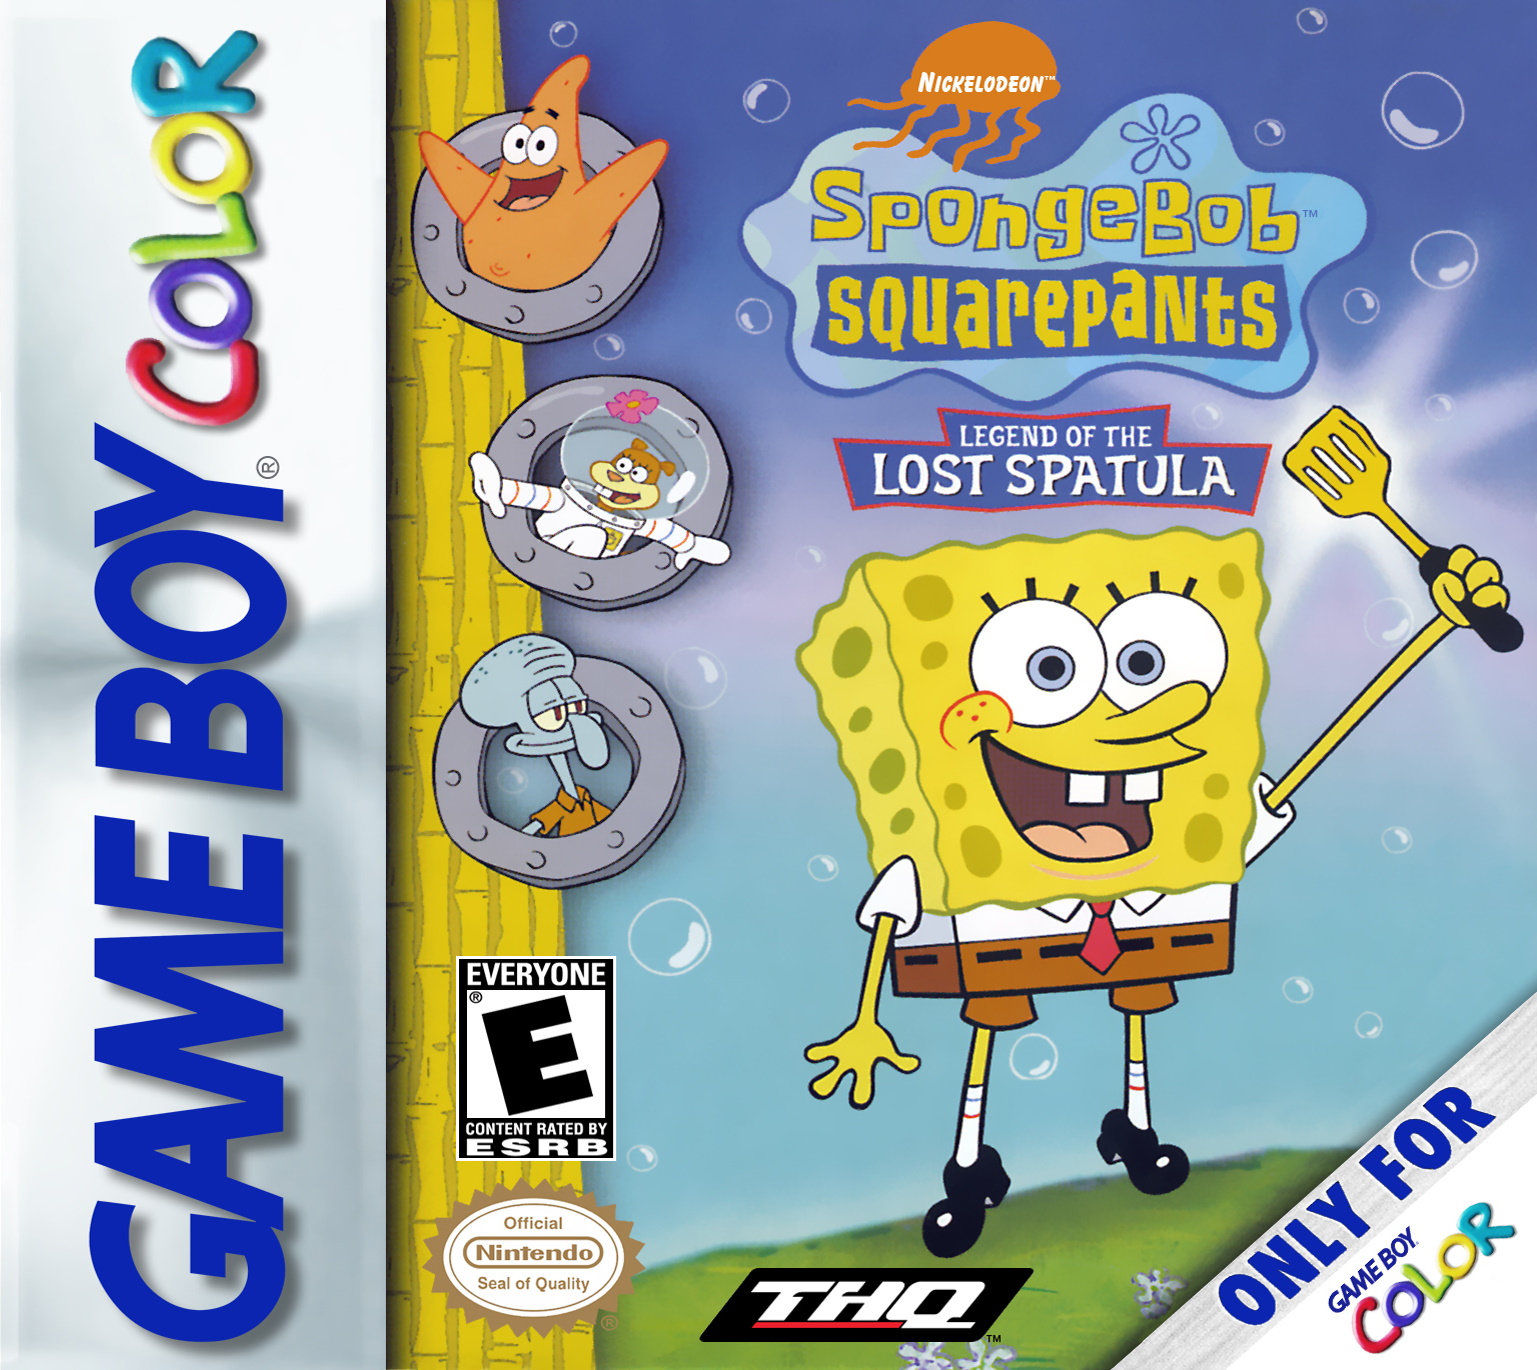 spongebob squarepants videos